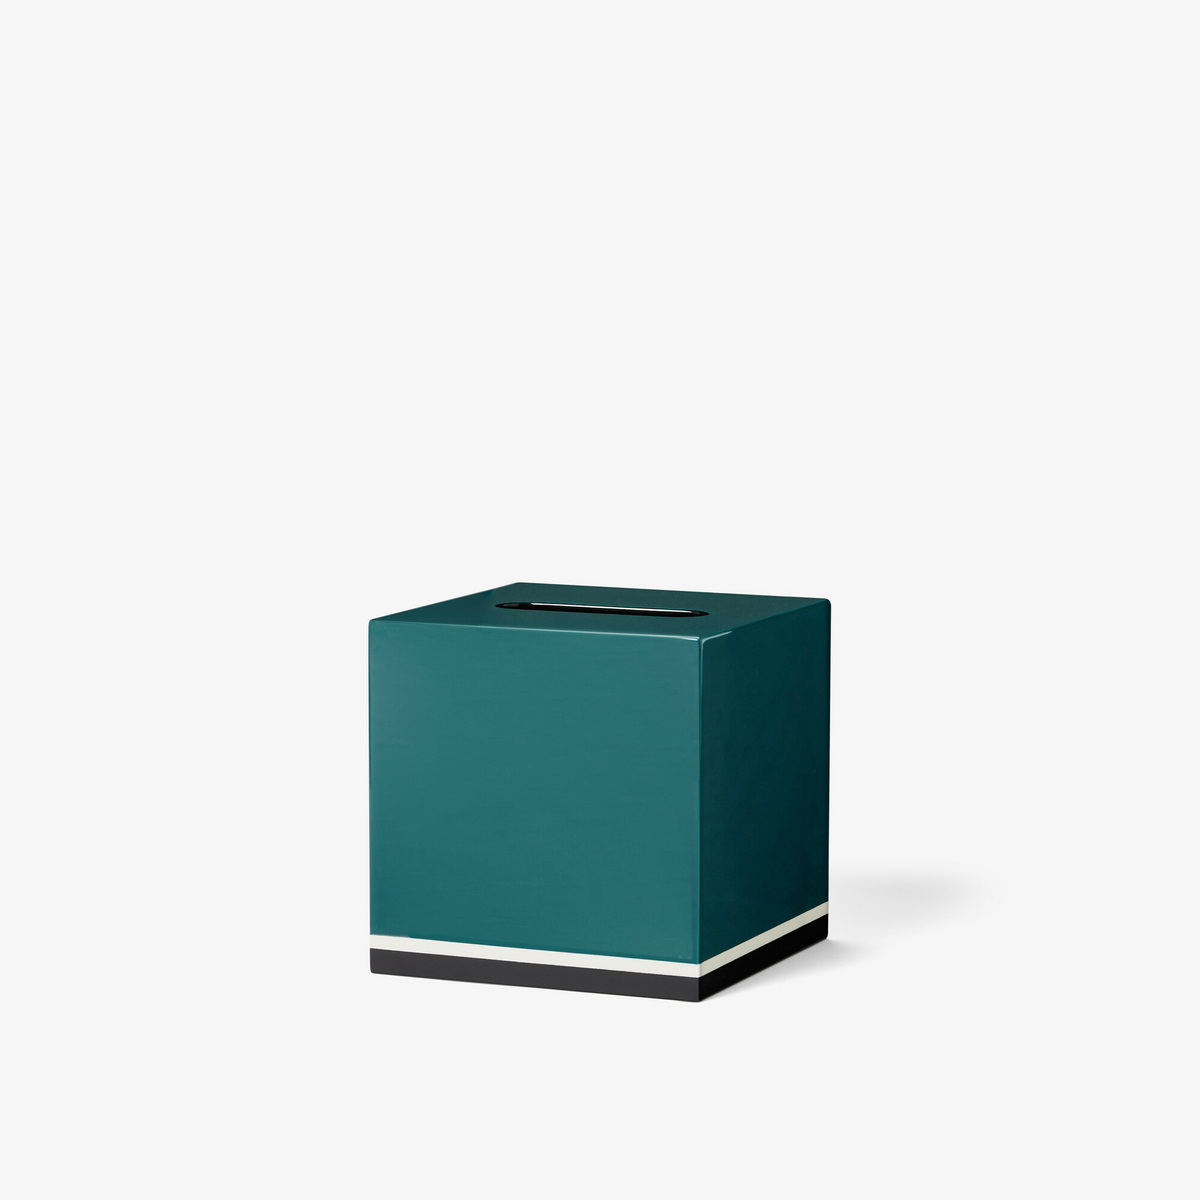 Little tissue box, Sarah Blue - 15x15cm - Lacquered wood - image 1